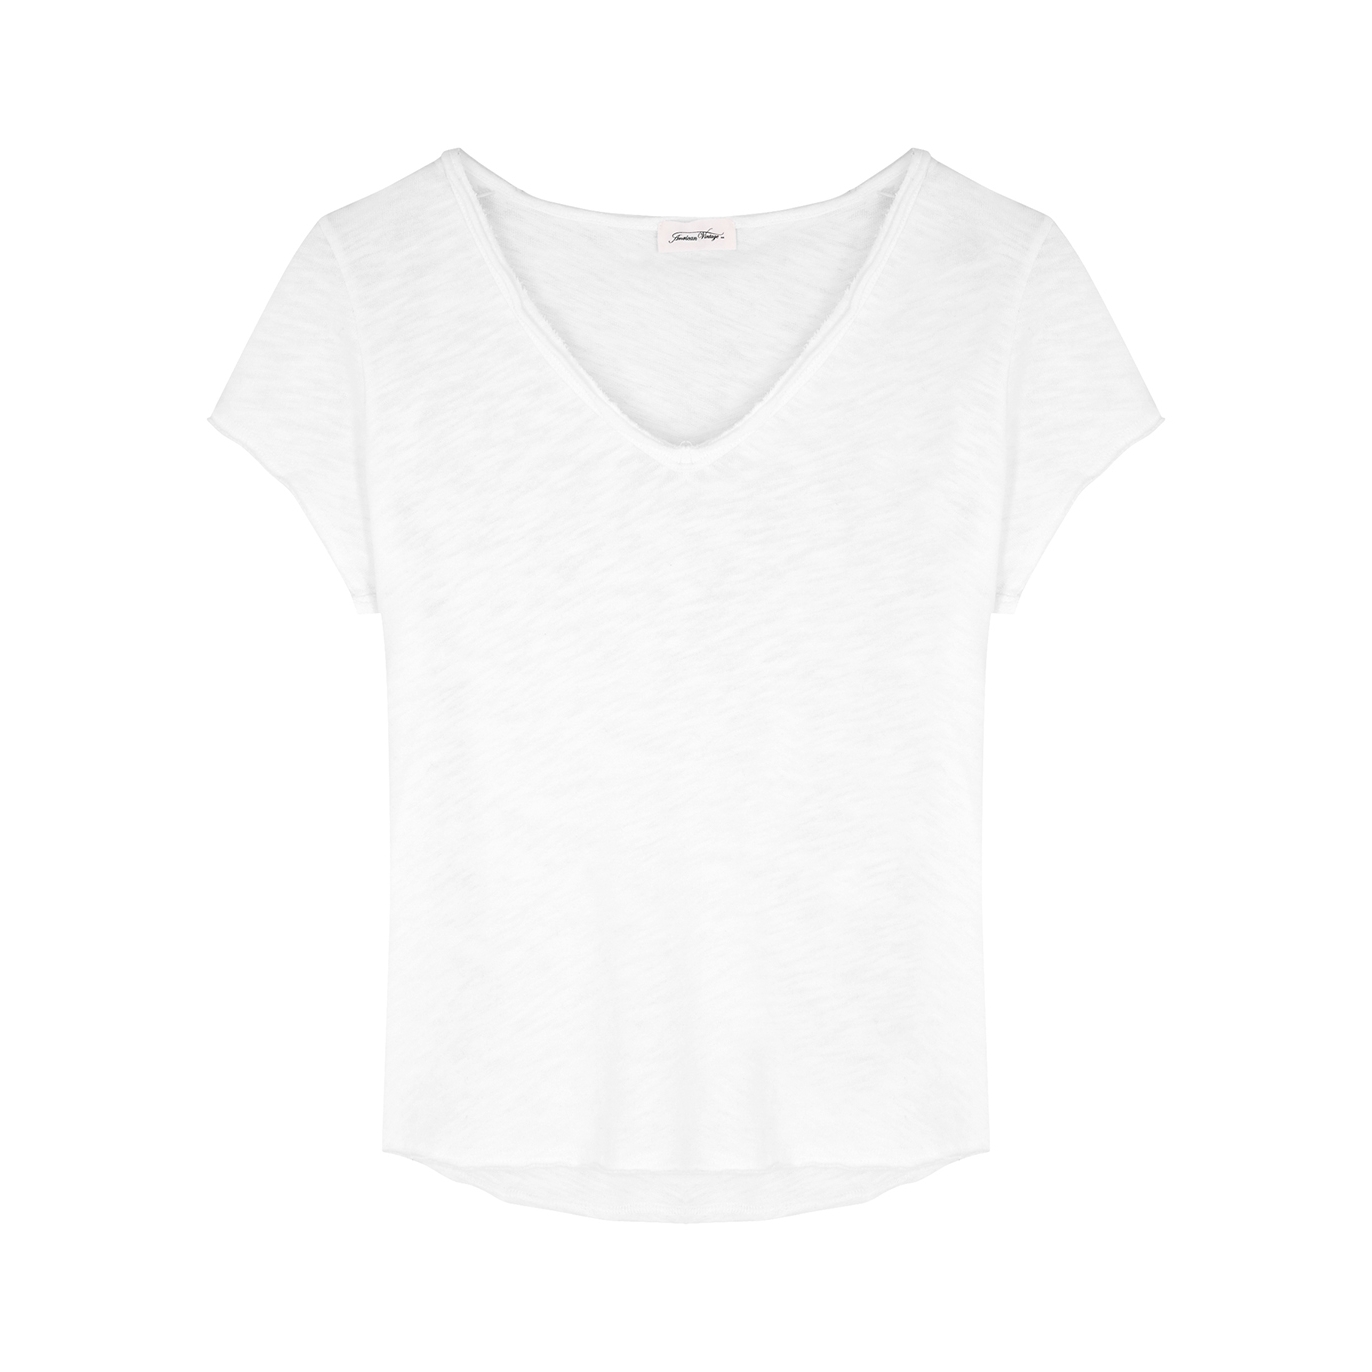 Sonoma White Slubbed Cotton T-shirt